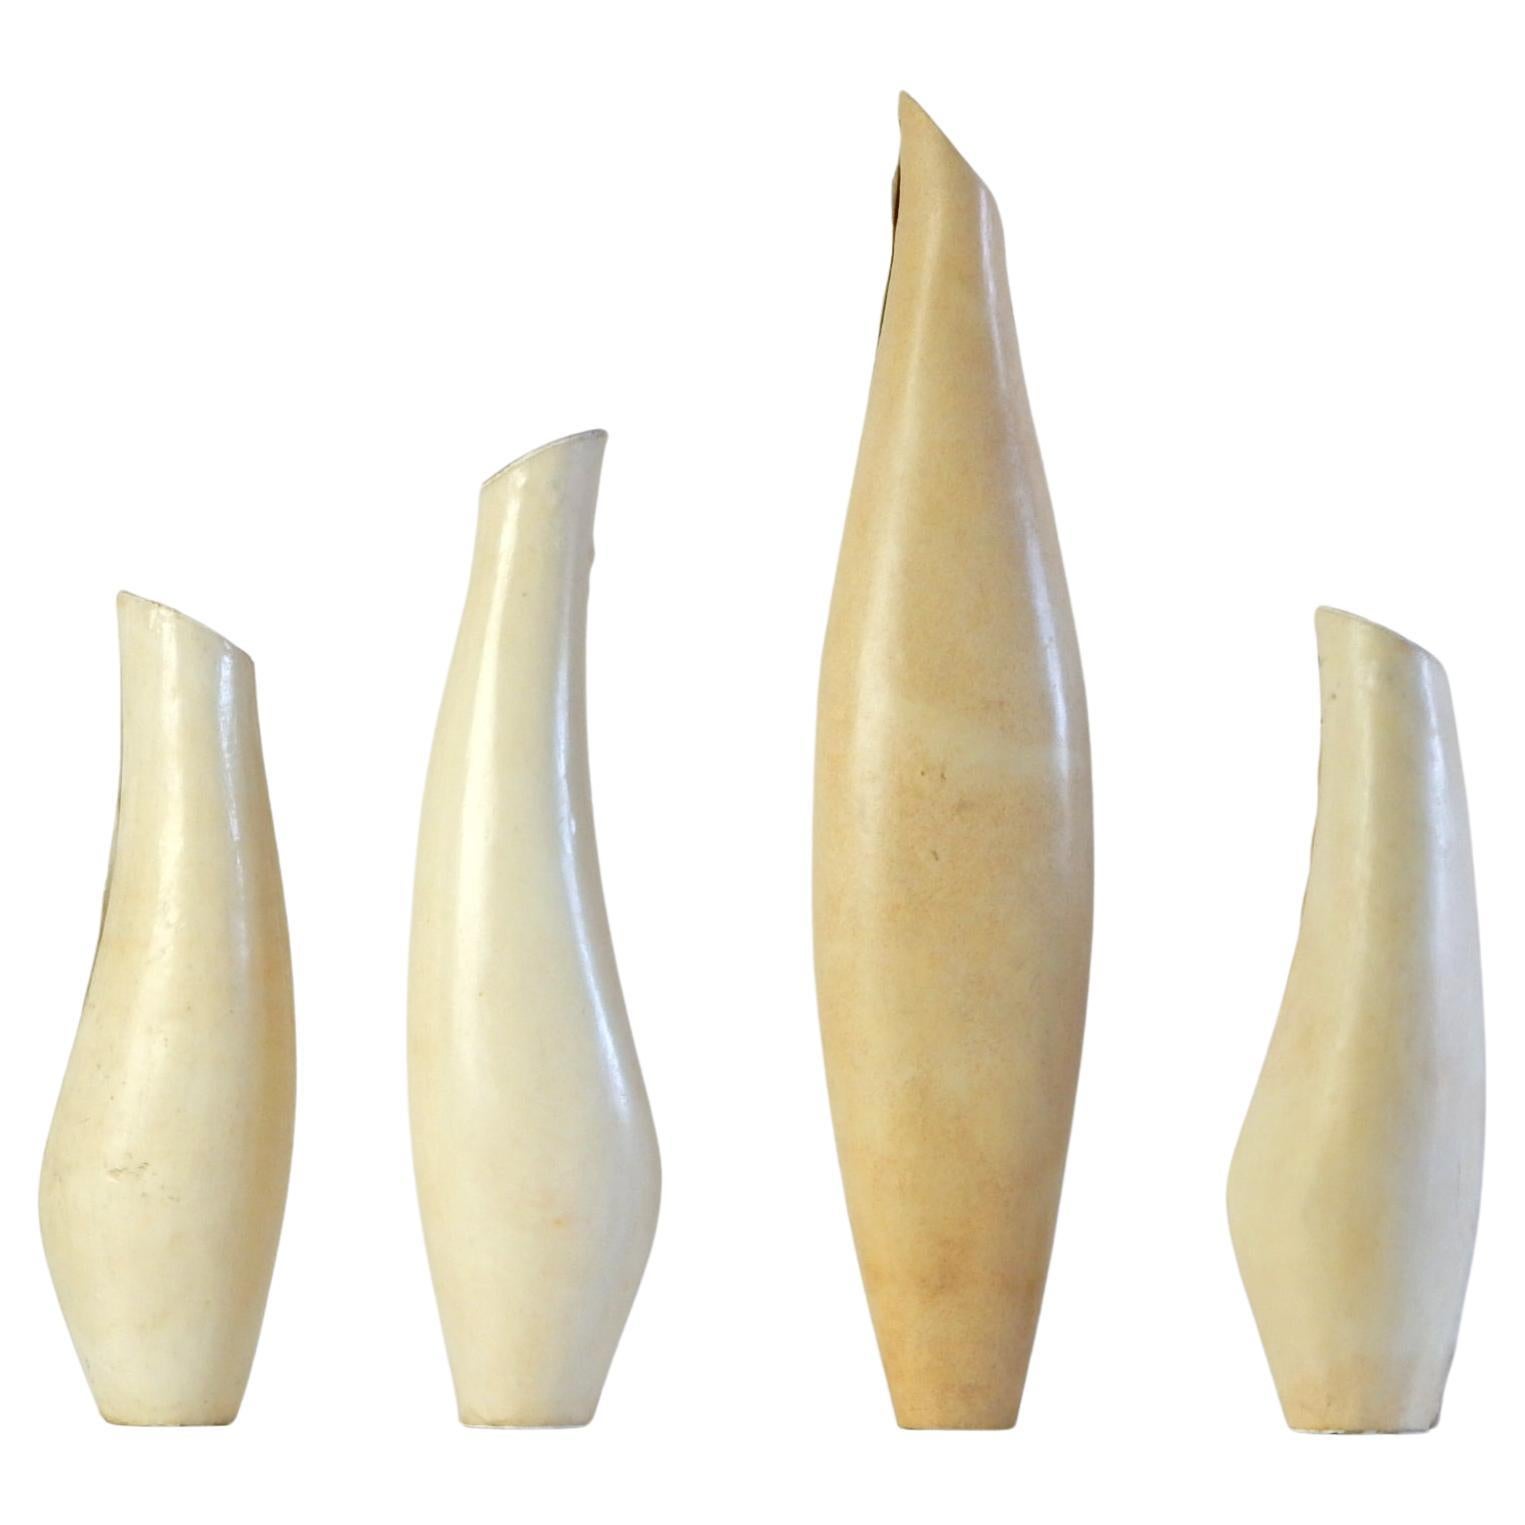 R & Y Augousti of Paris Leather Shagreen Clad Vases, Set of 4